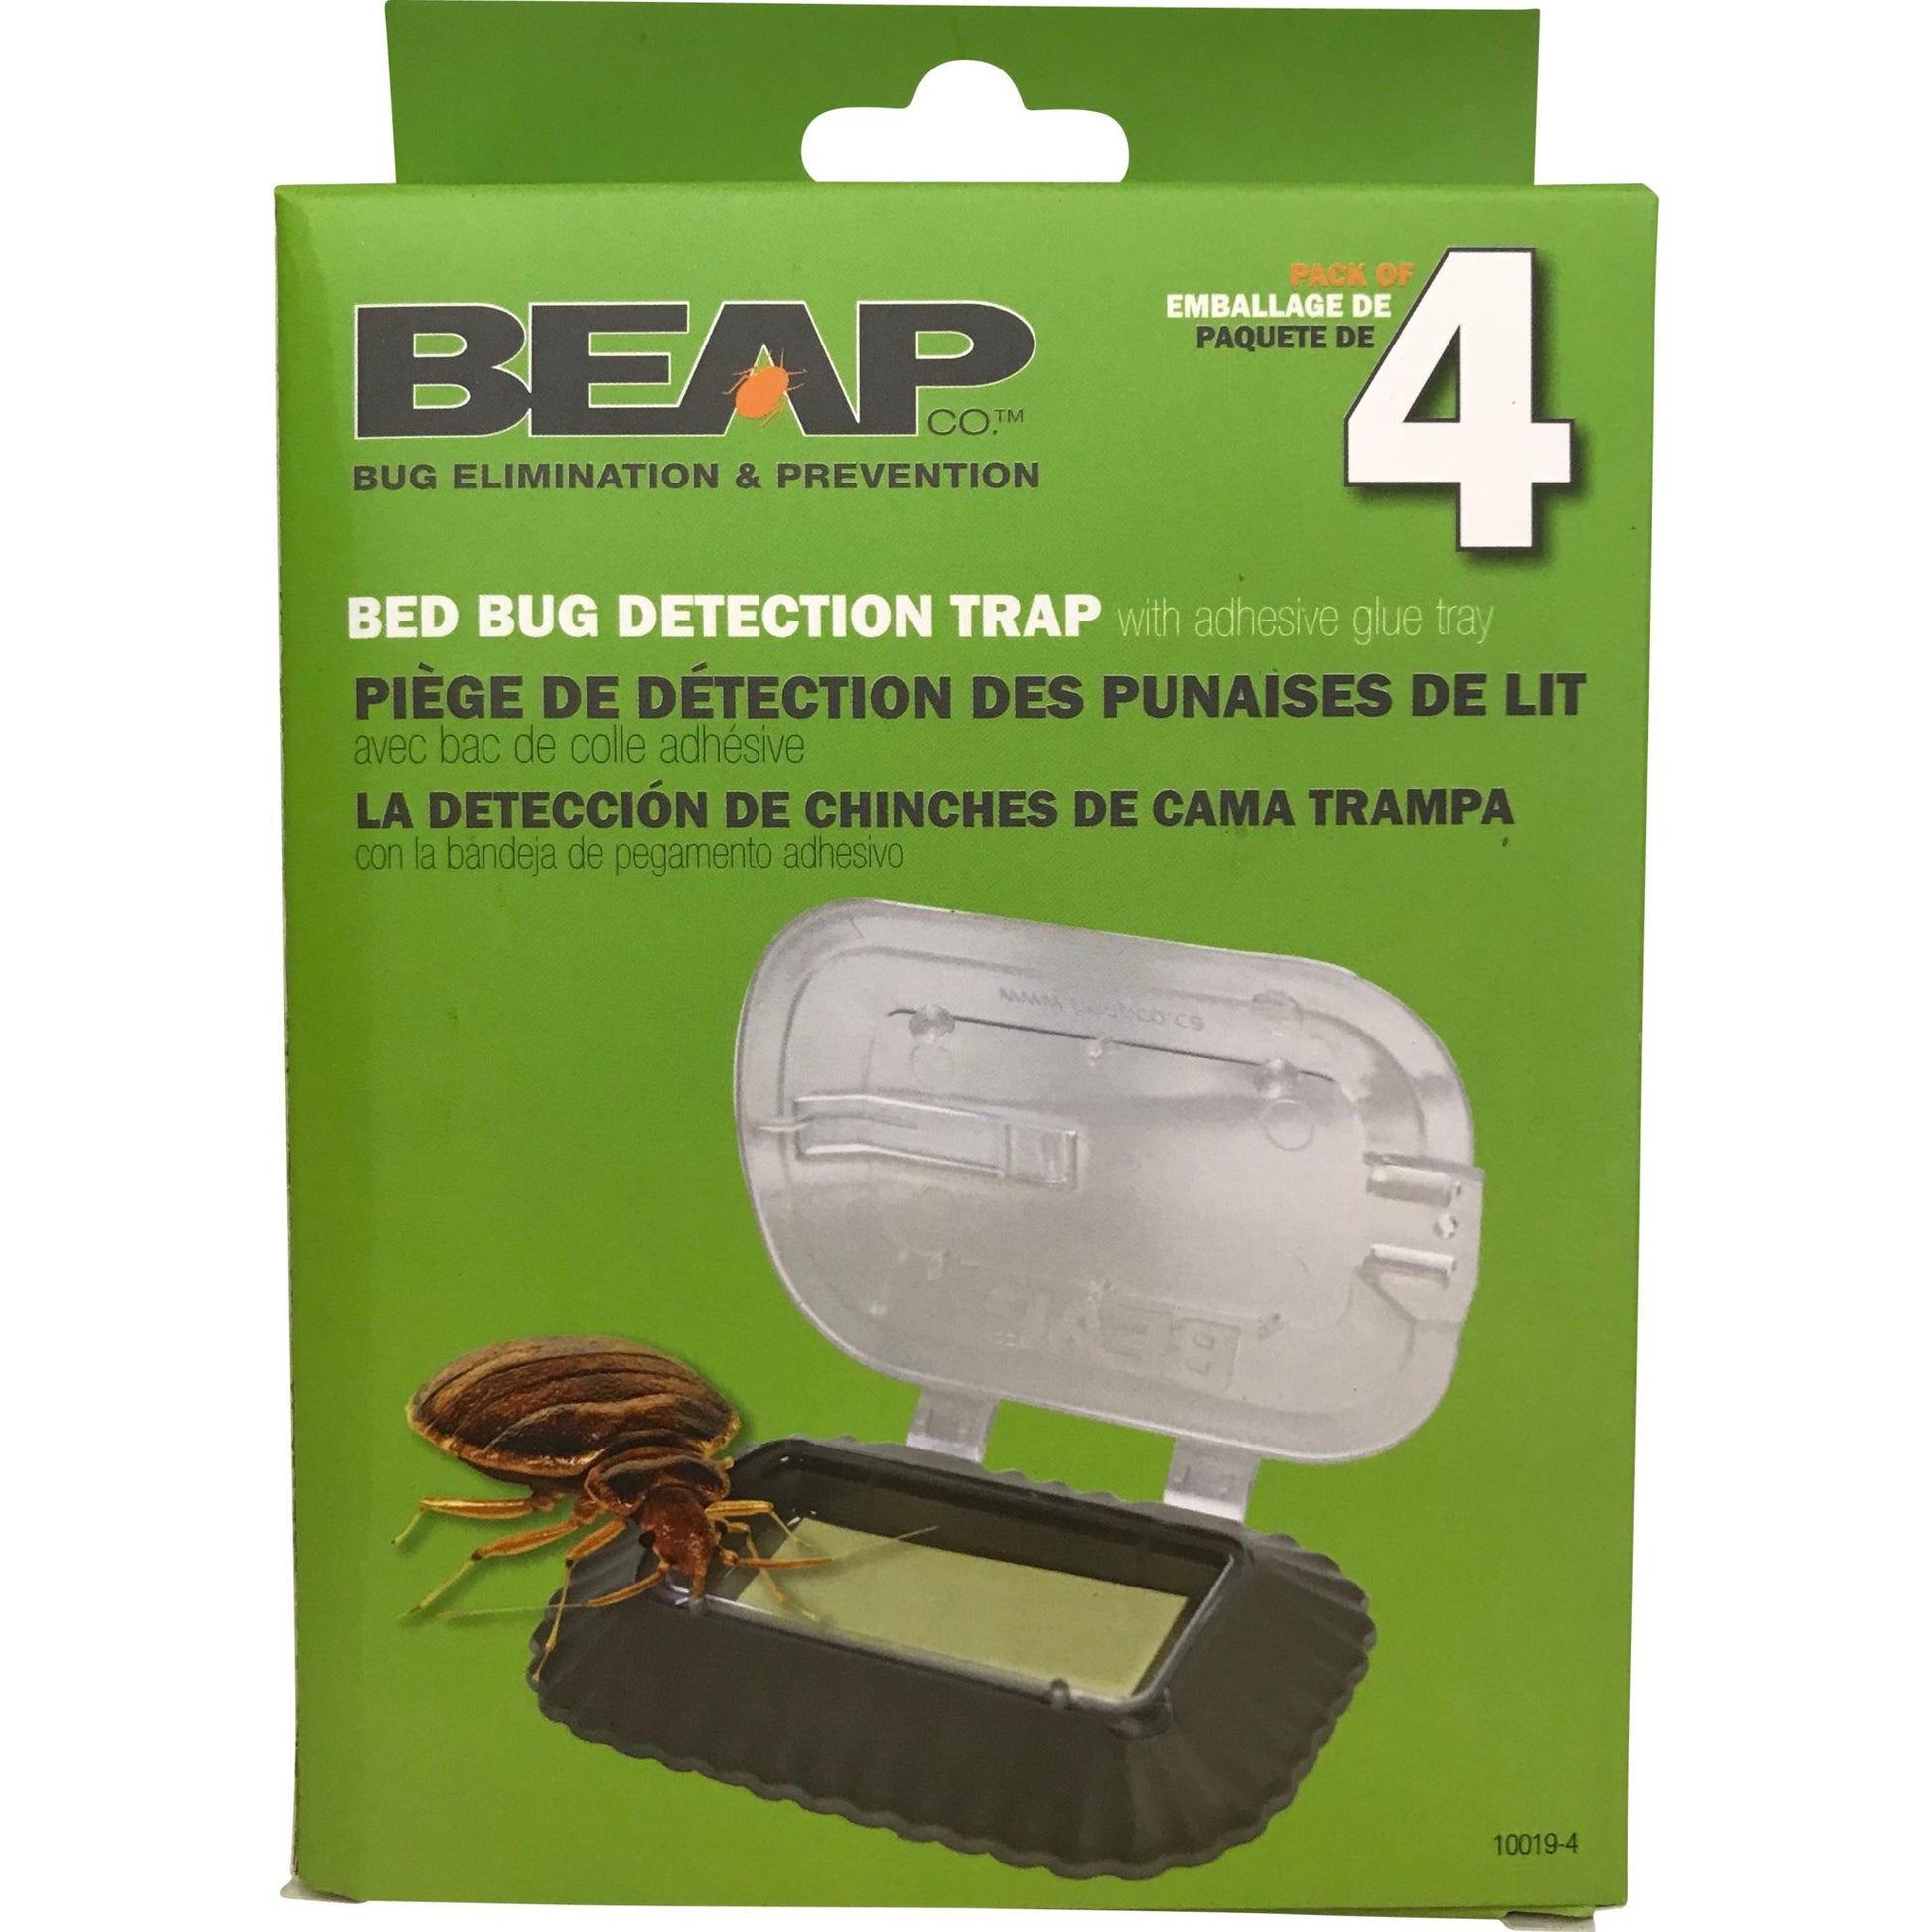 Bed Bug Detection Trap - Bed Bug SOS